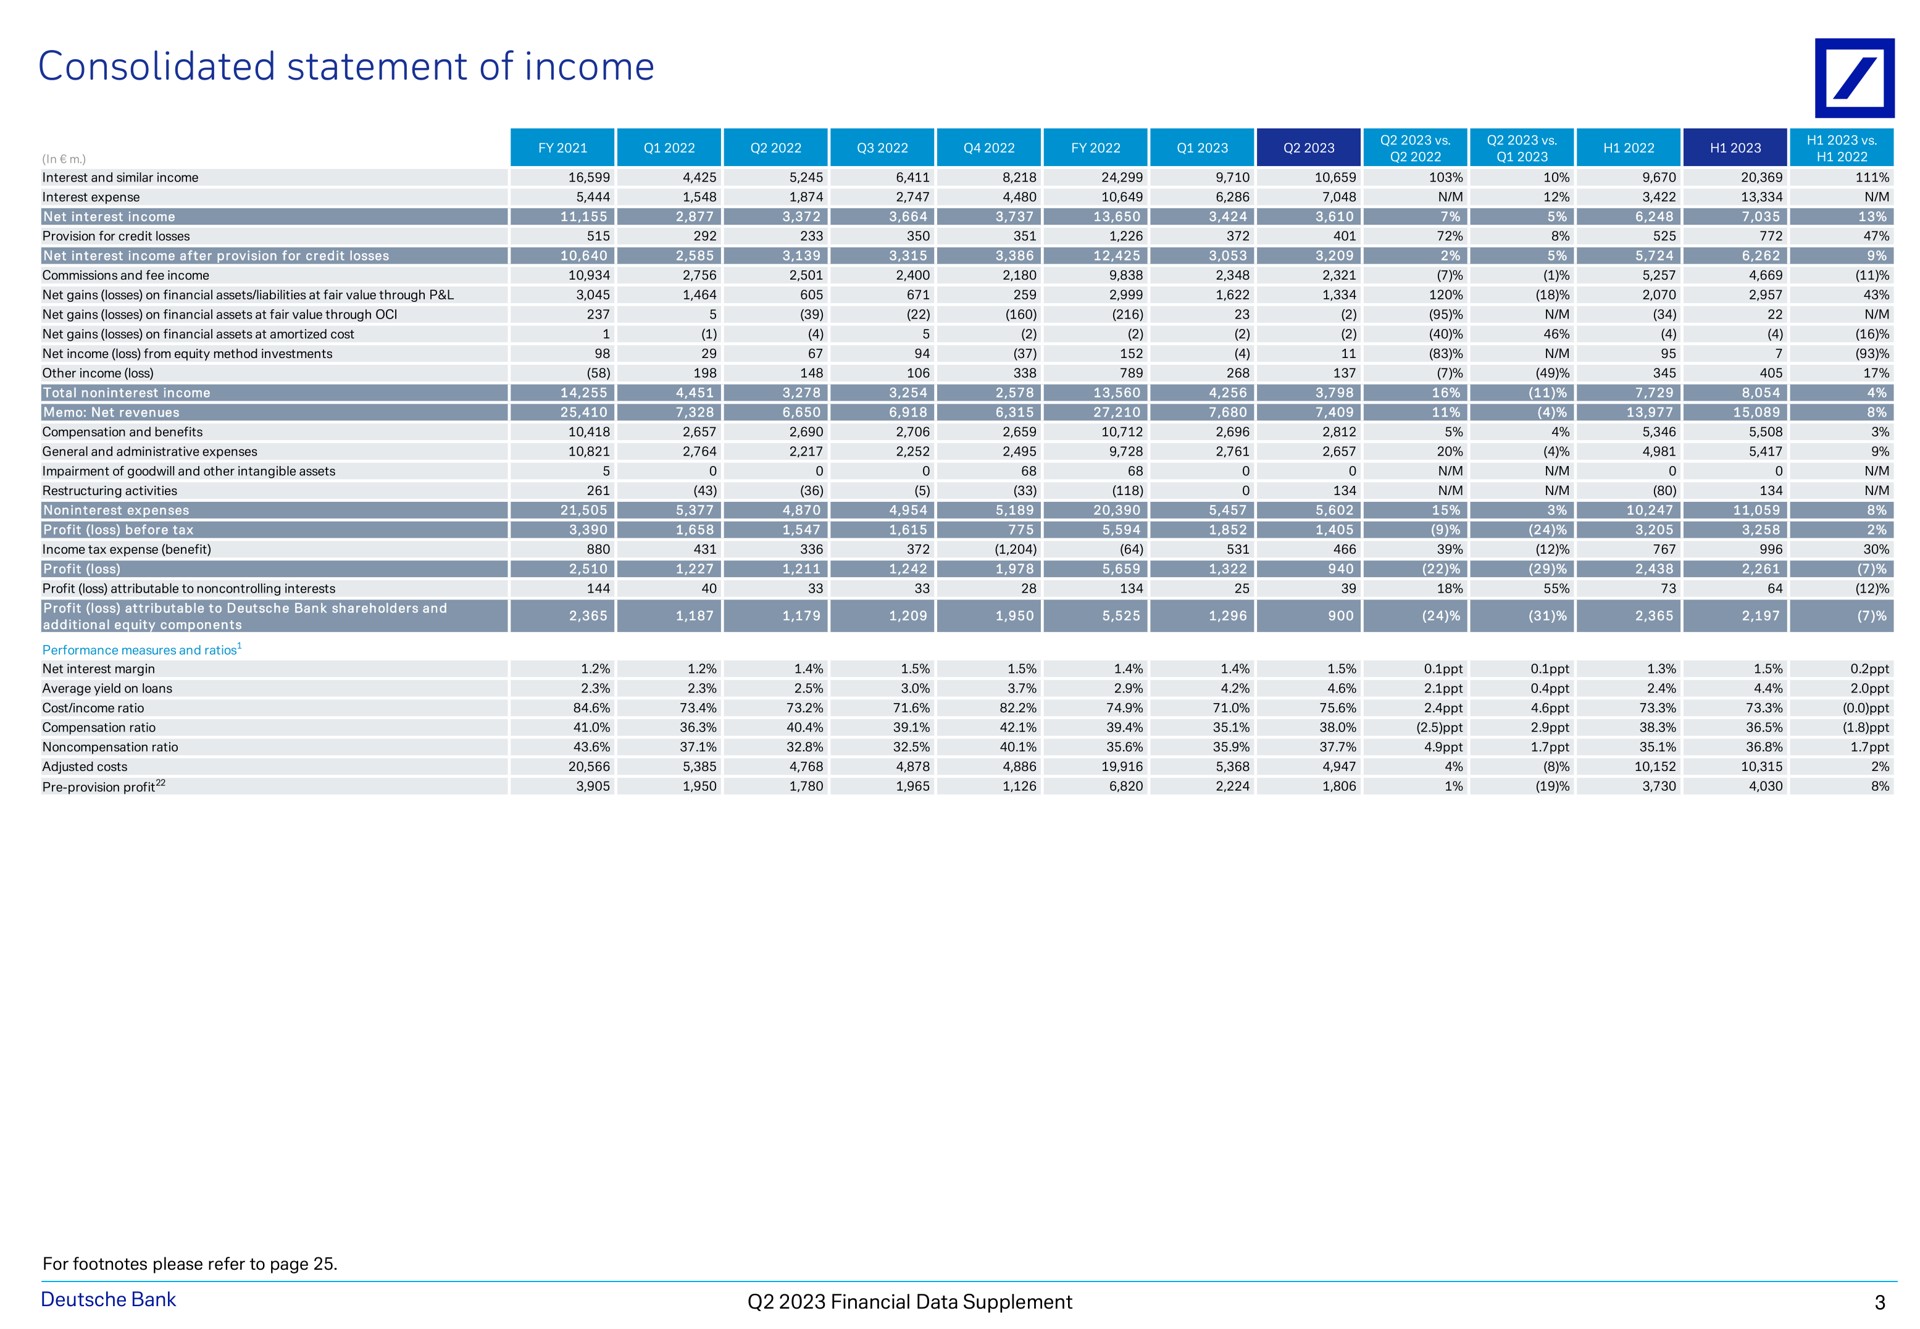 consolidated statement of income a i a a a a cest a a bank financial data supplement | Deutsche Bank